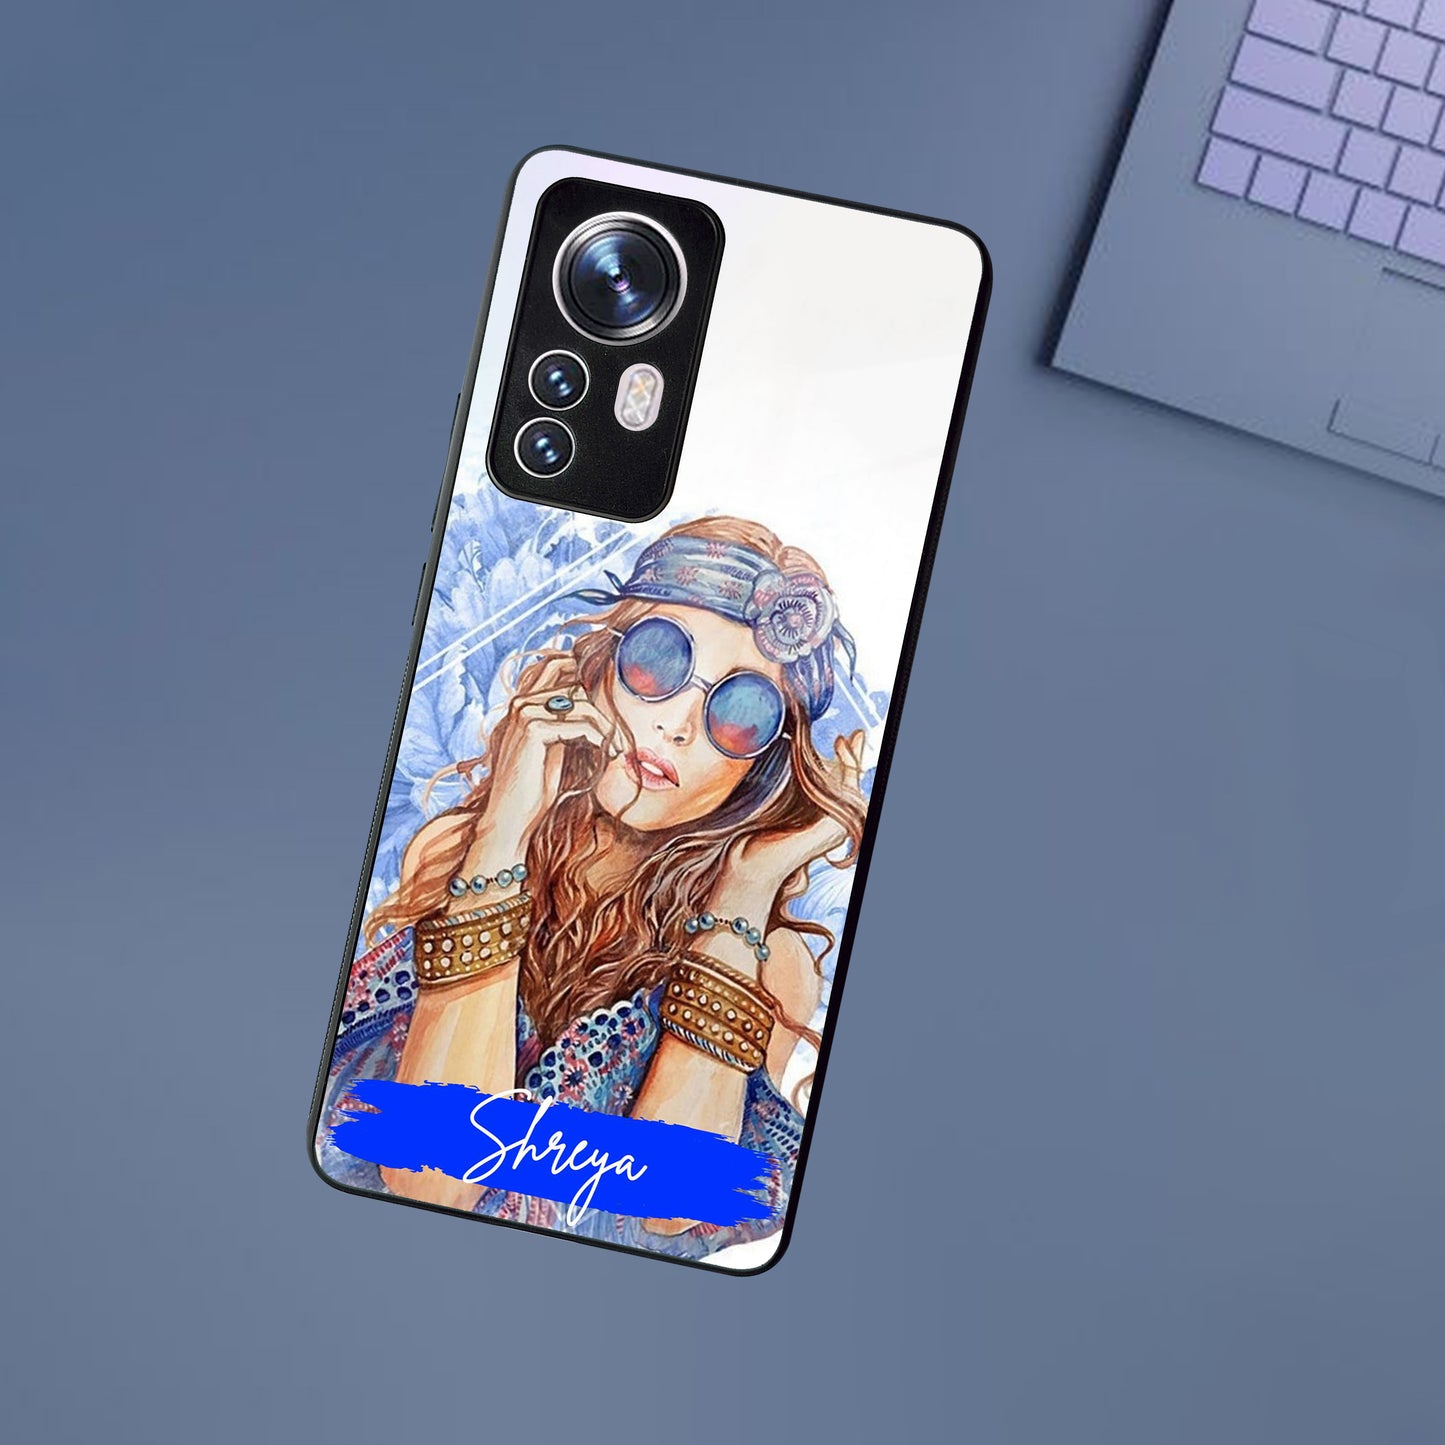 Bindass Babe Customize Glass Case Cover For Redmi/Xiaomi